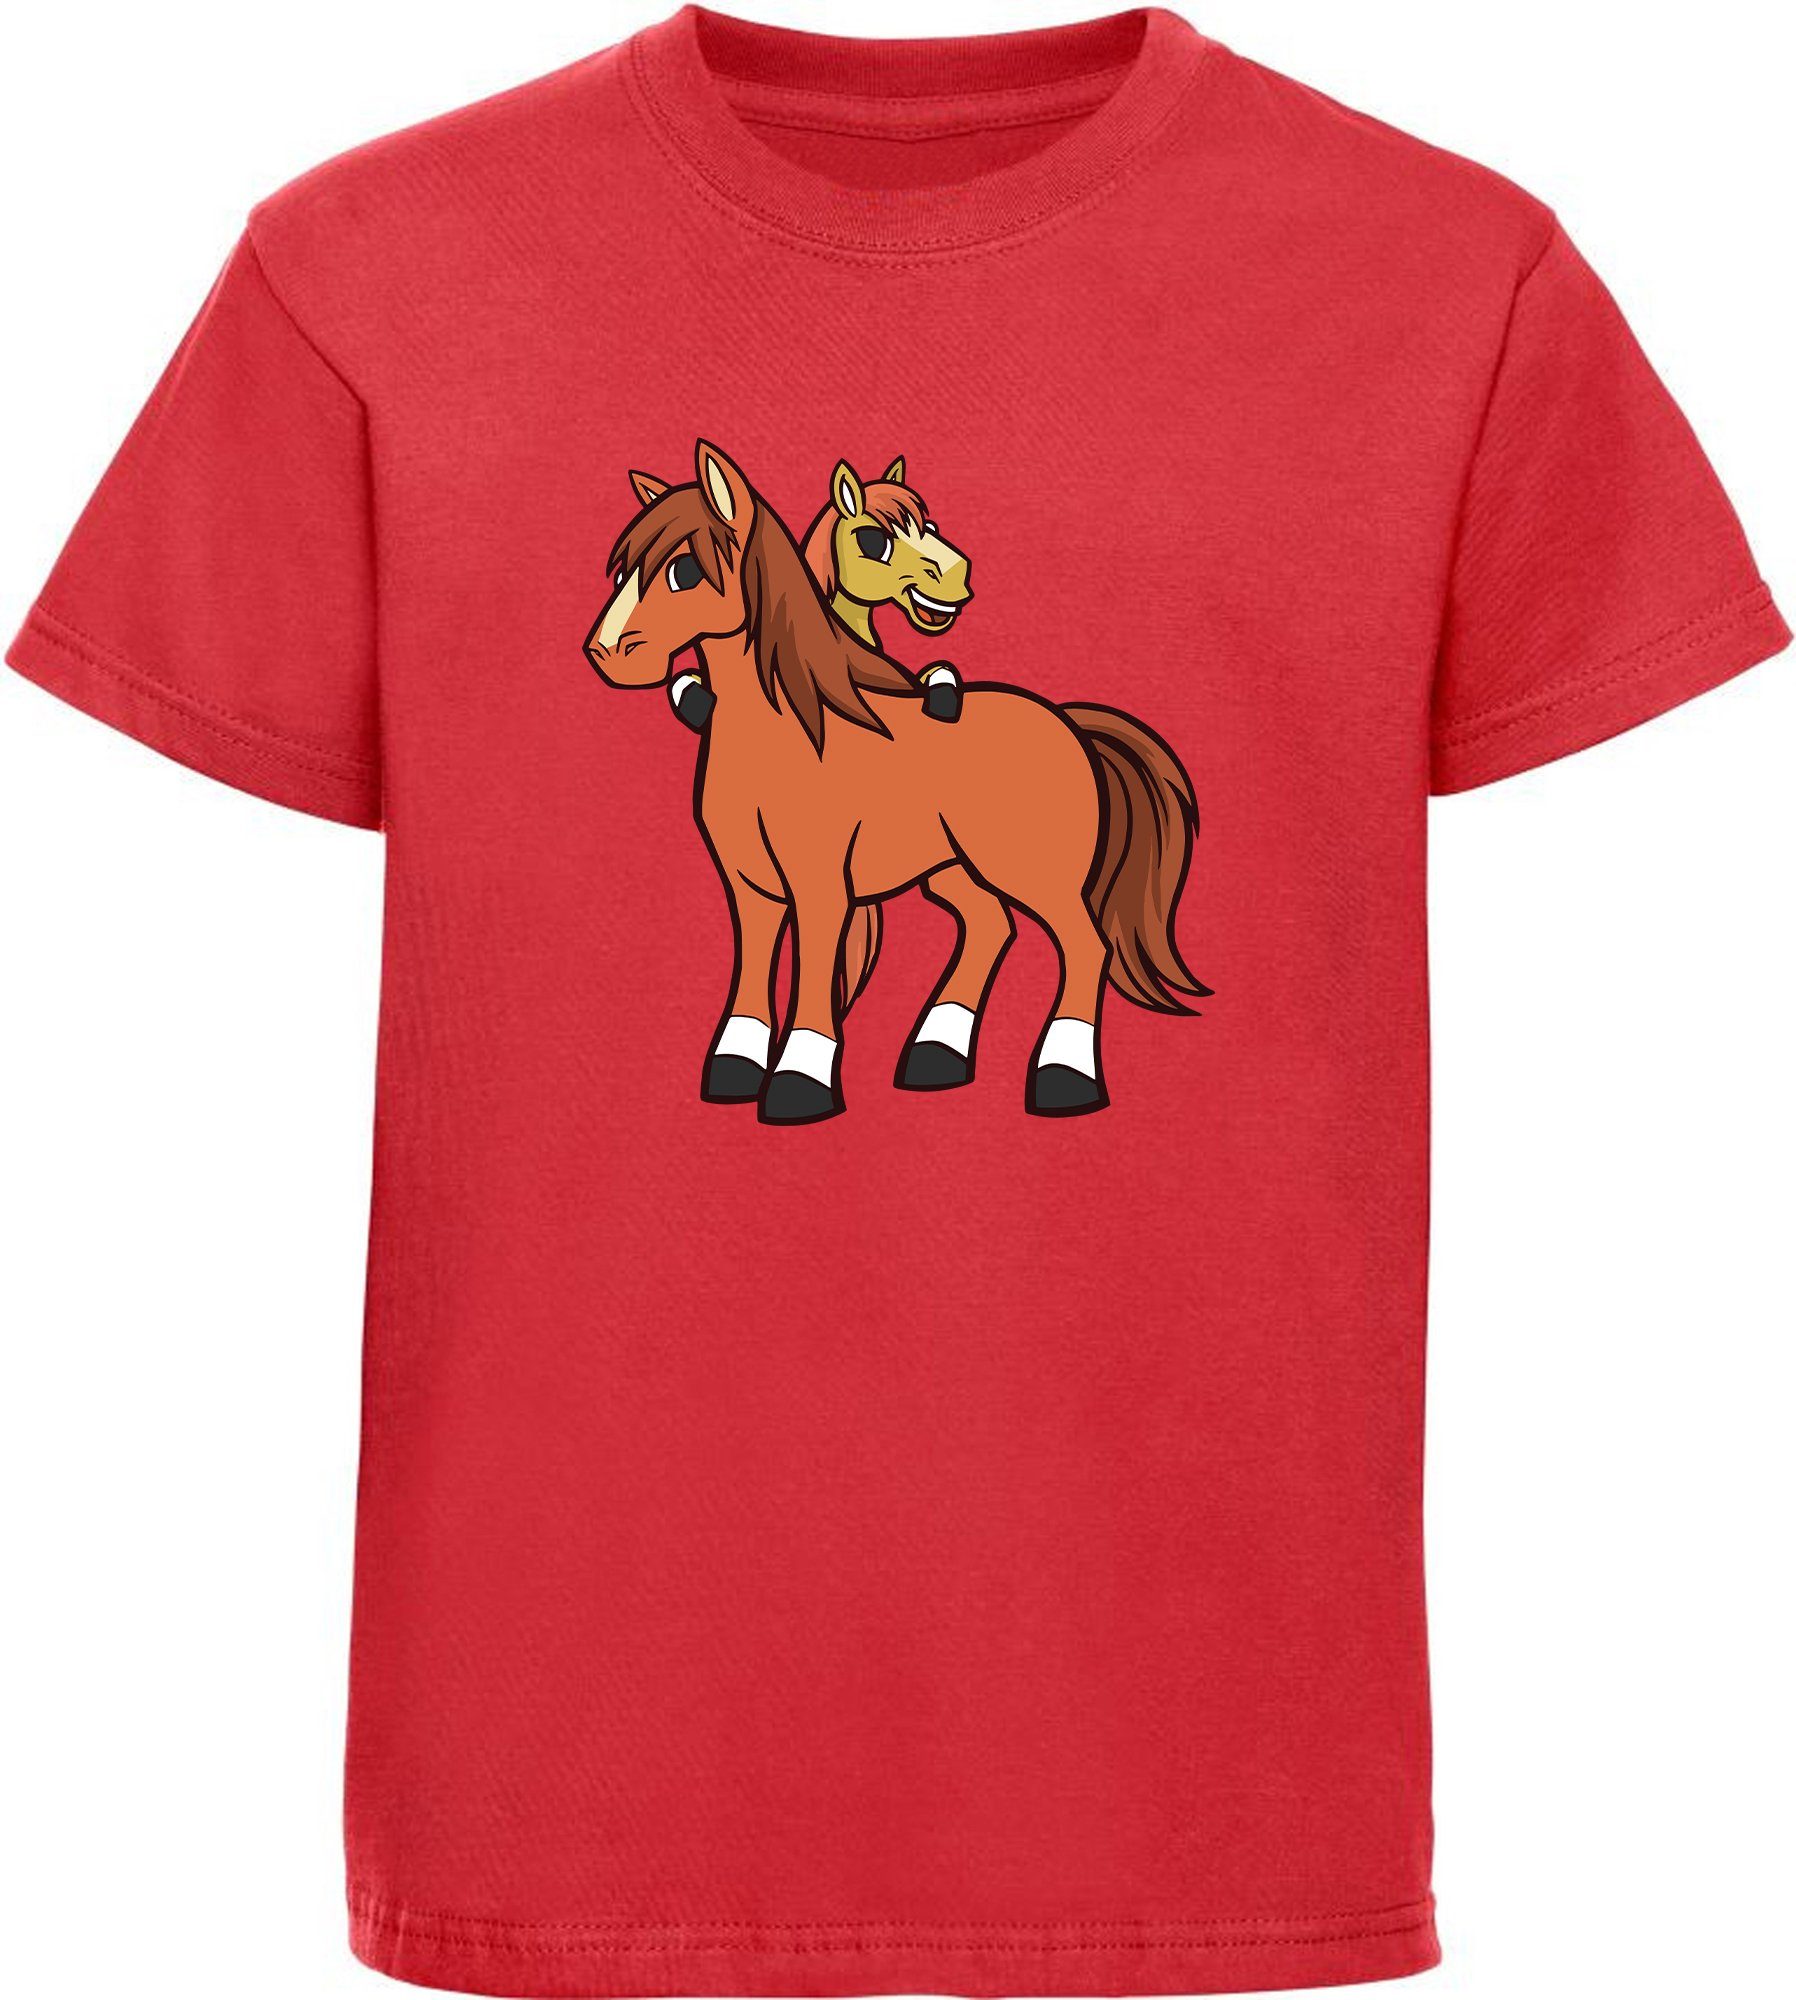 MyDesign24 T-Shirt Kinder Pferde Print Shirt bedruckt - 2 cartoon Pferde Baumwollshirt mit Aufdruck, i251 rot